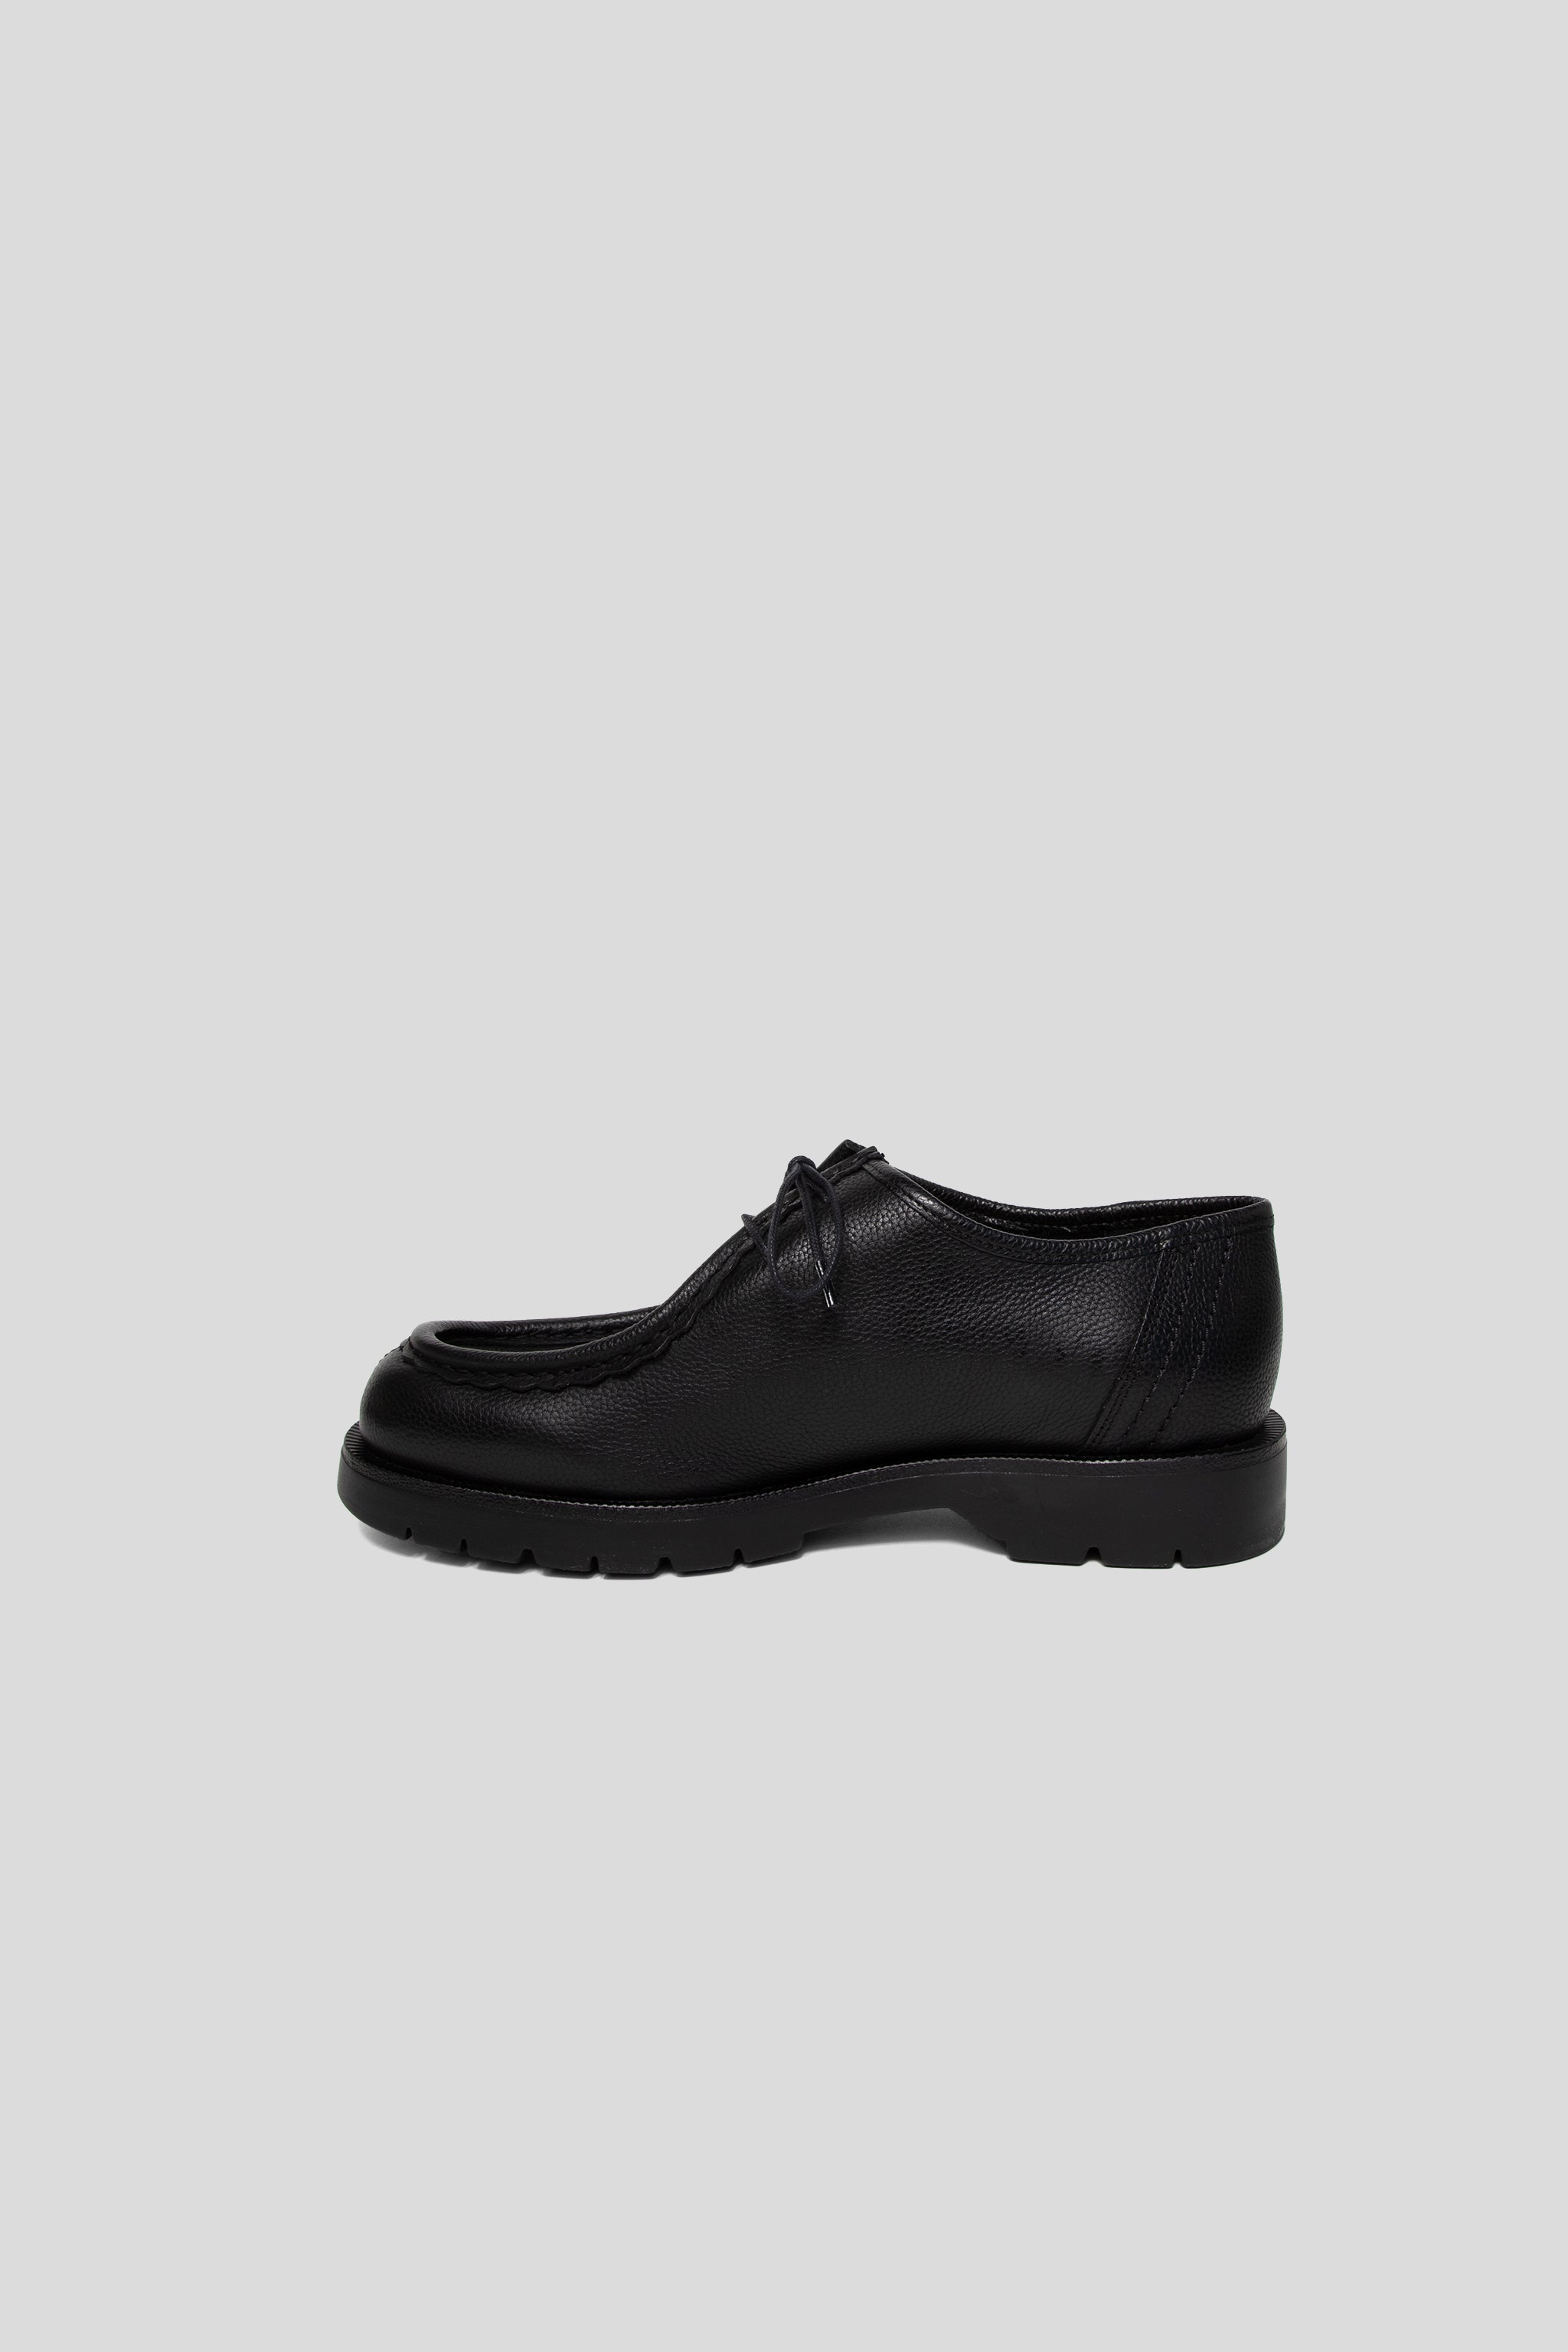 Kleman Padror G VGT Shoe in Black | Wallace Mercantile Shop